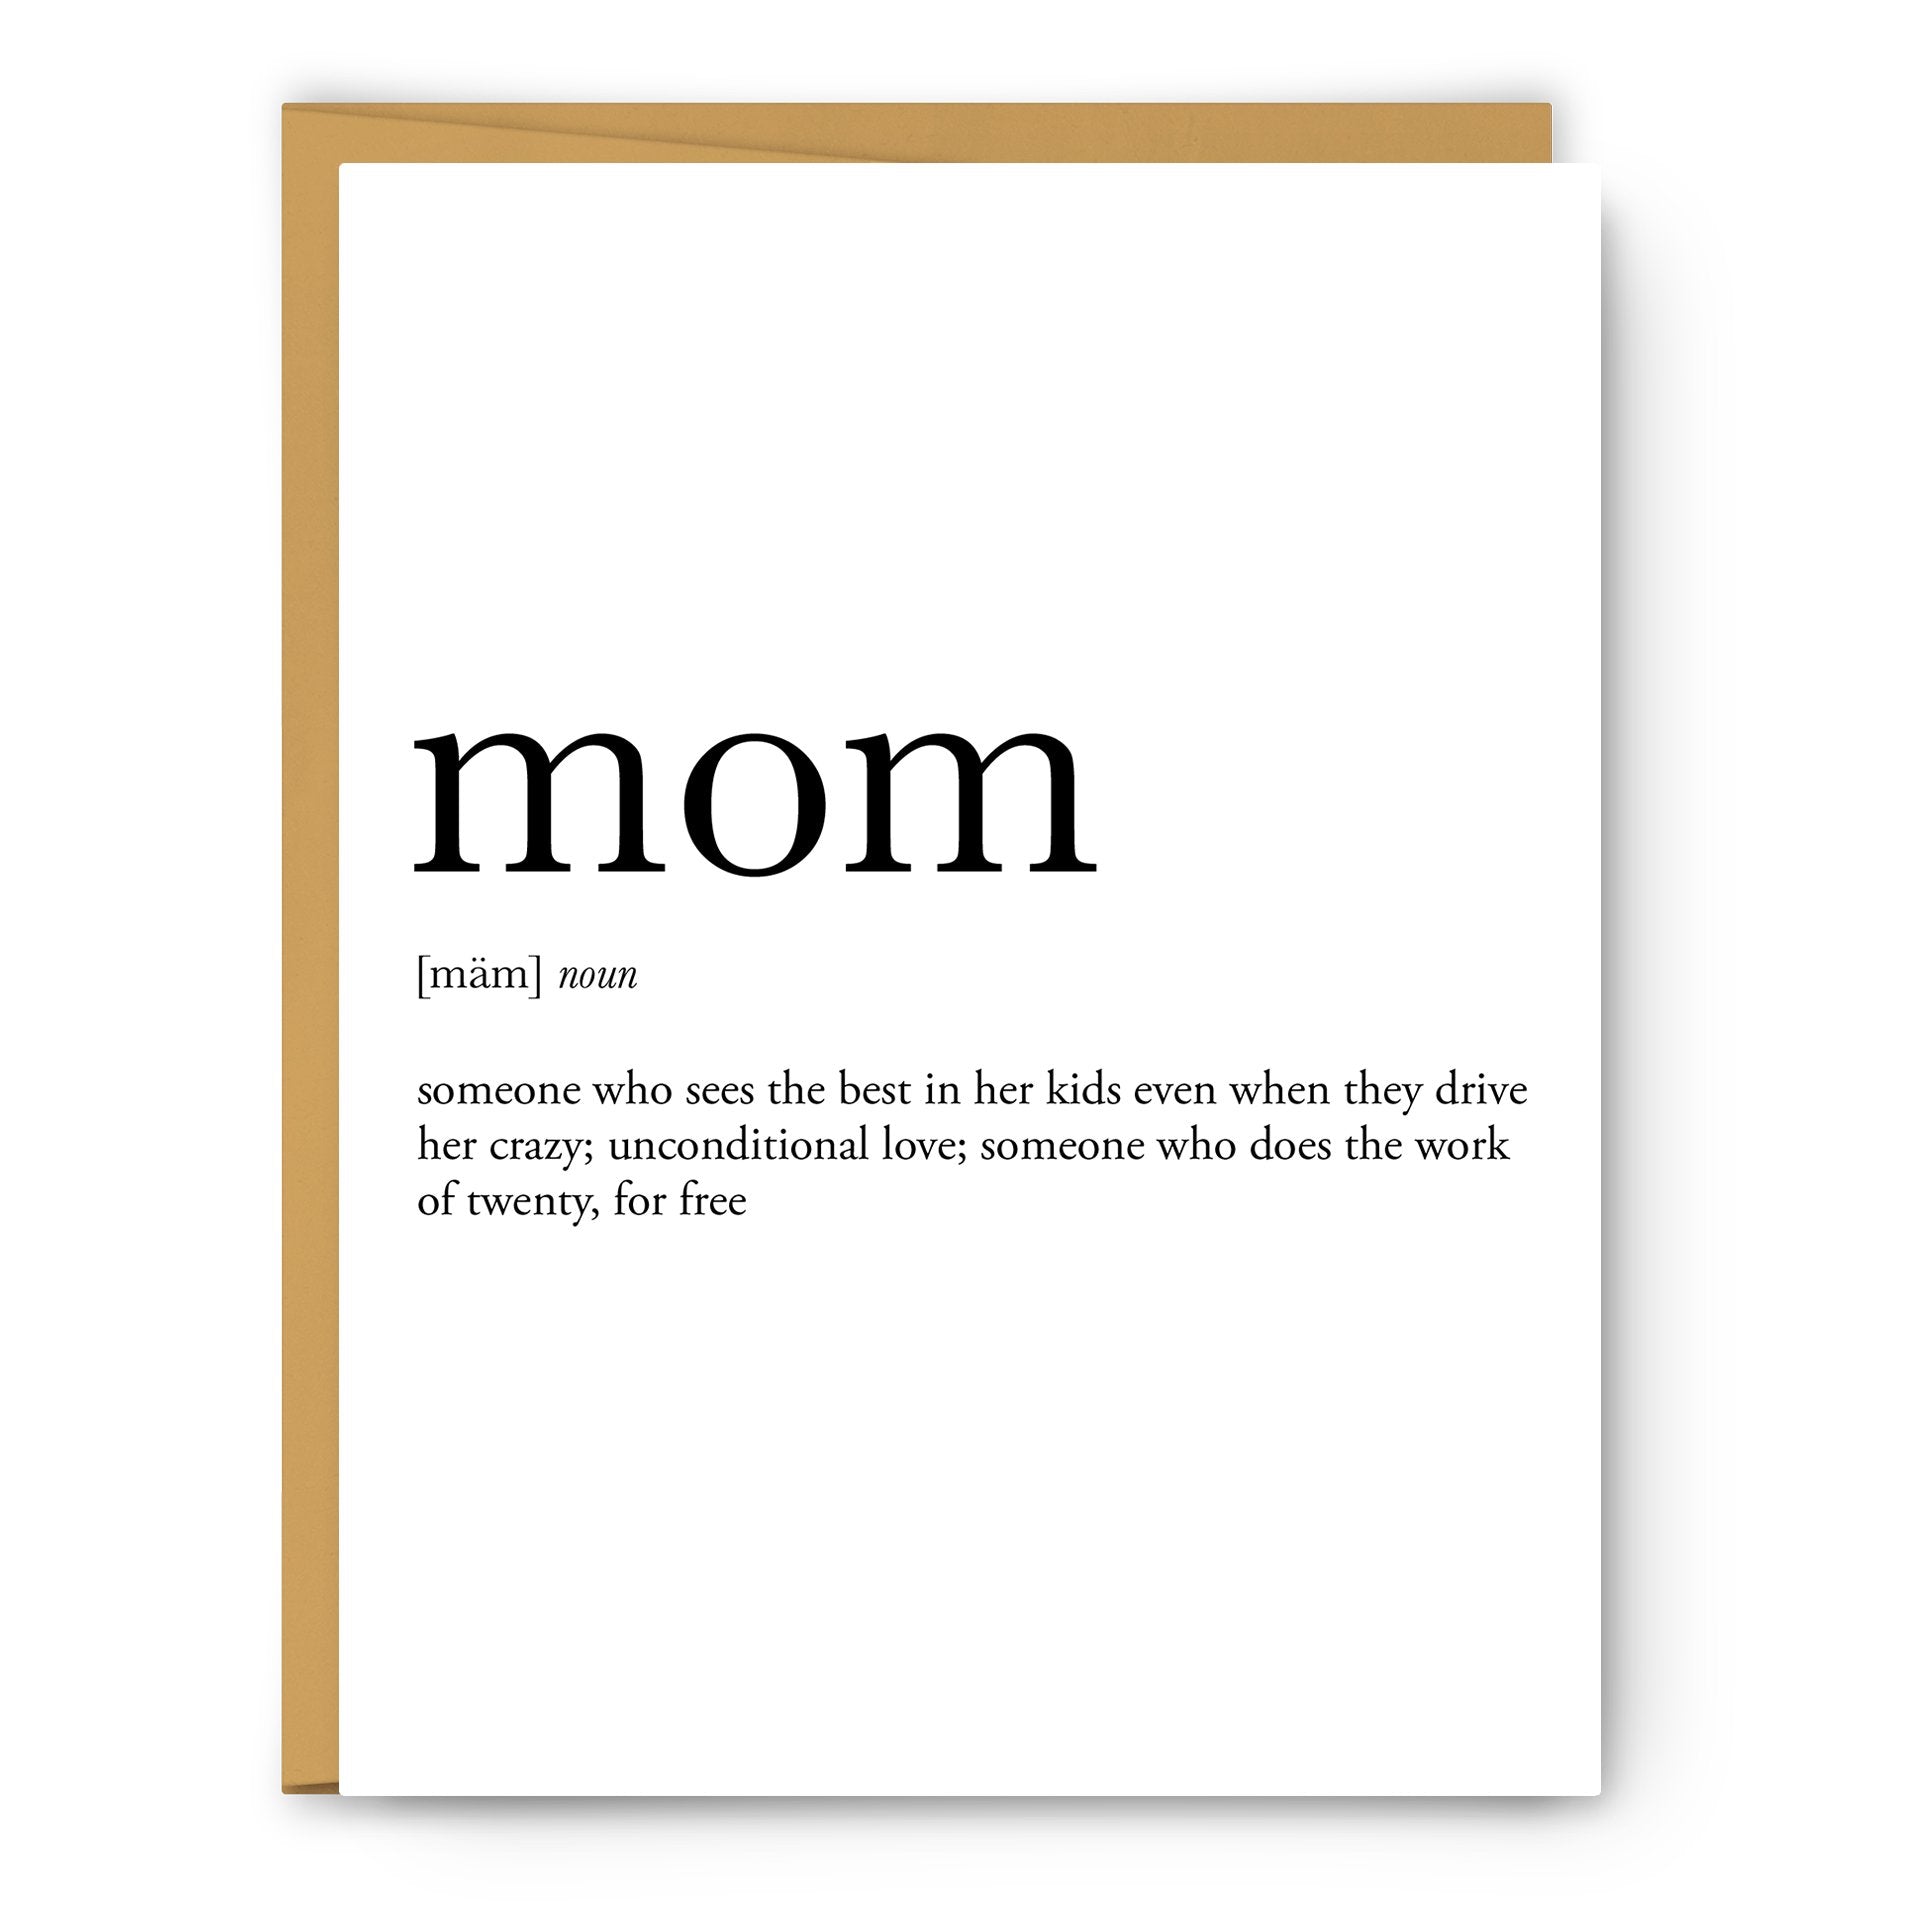 mom noun greeting card